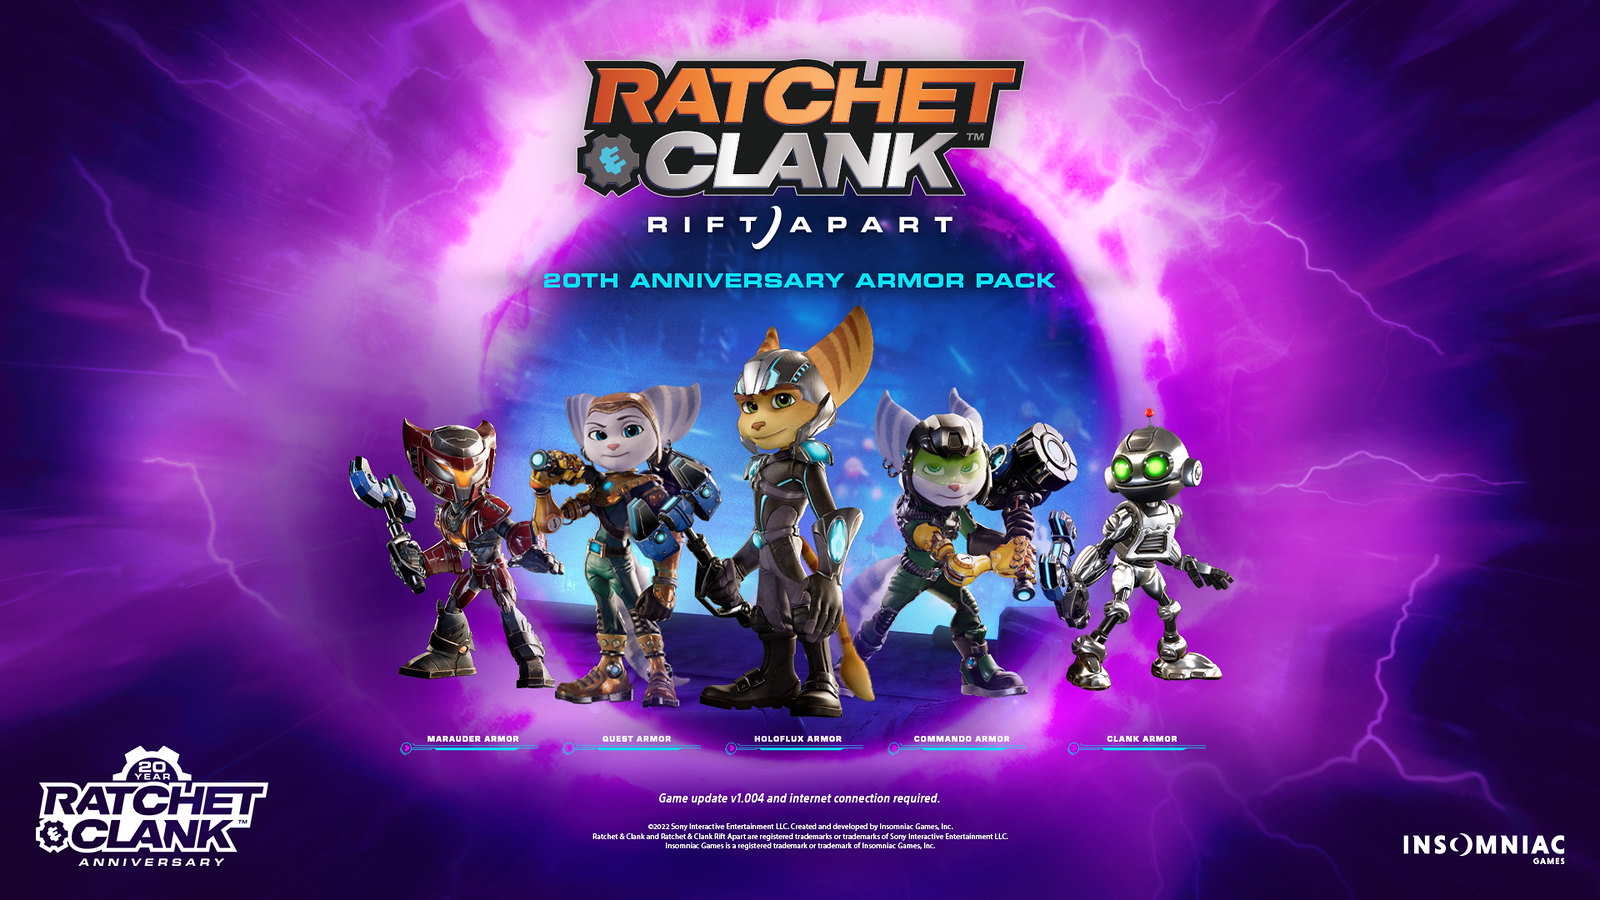 Celebrating 20 years of Ratchet & Clank